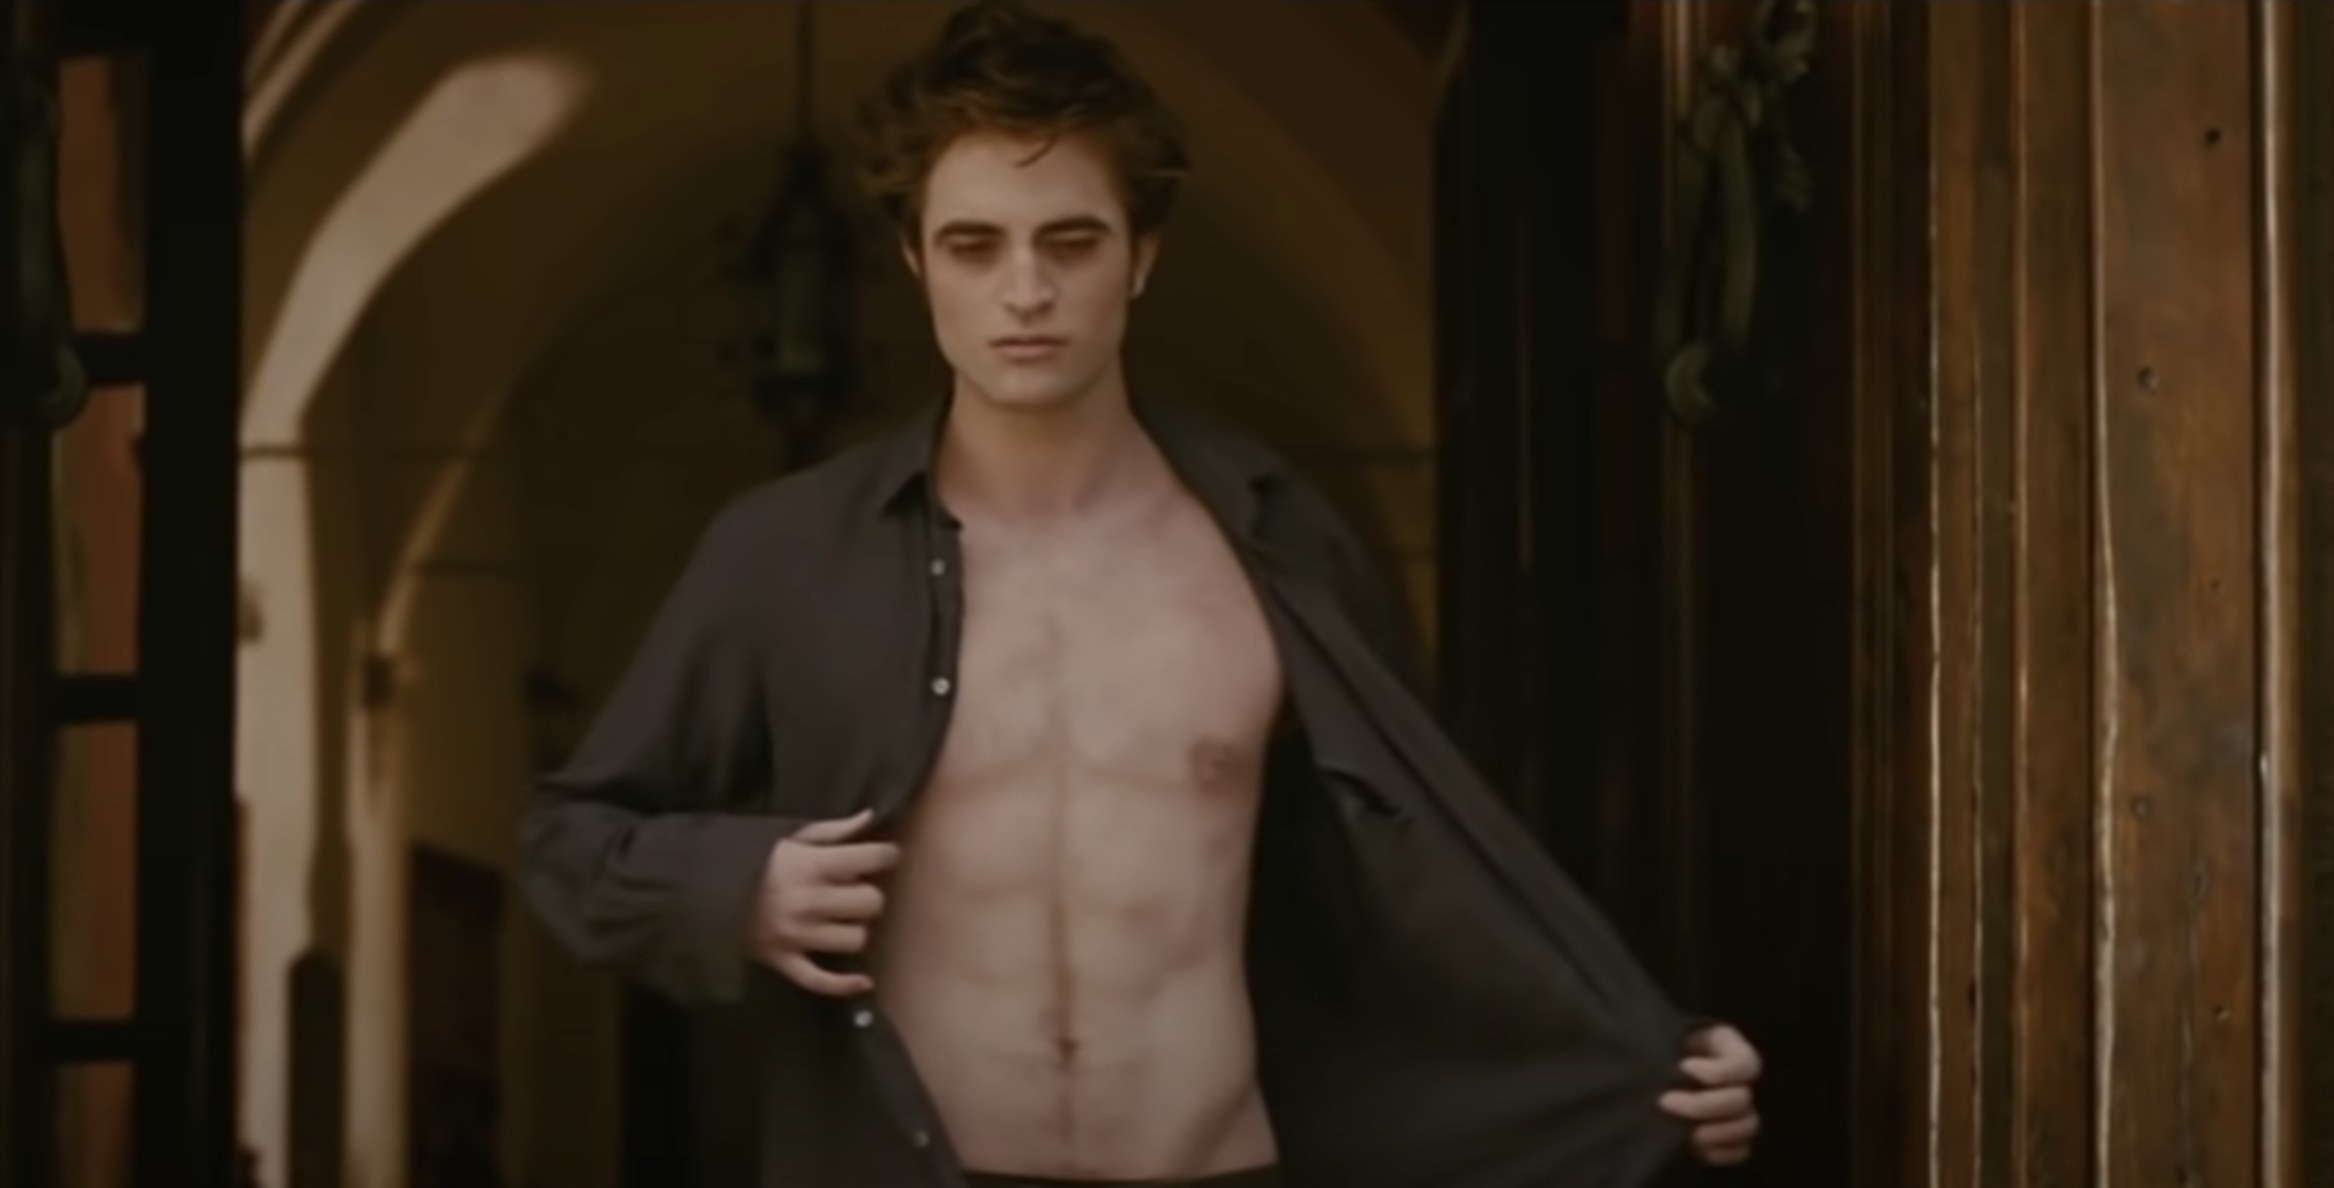 Edward walking towards the sun shirtless